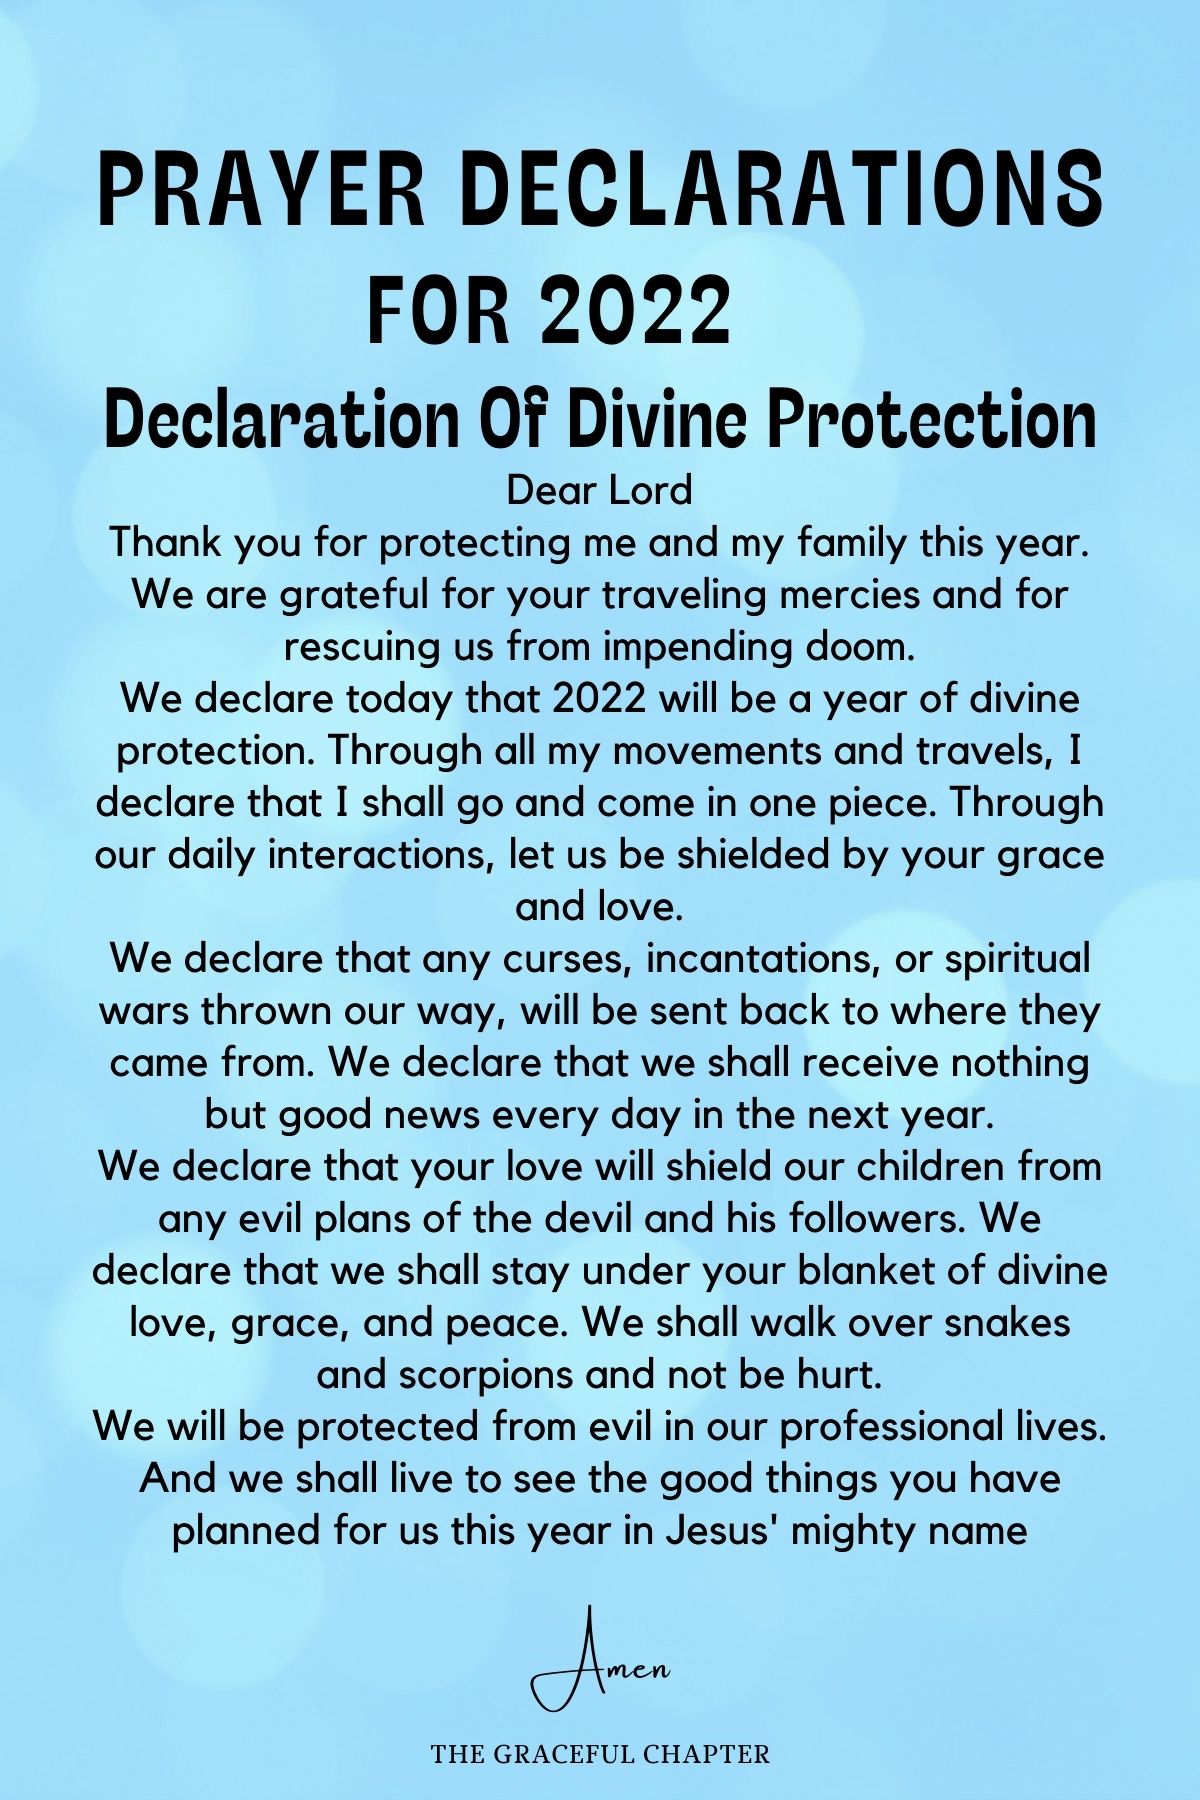 Prayer declarations for 2022 - declaration of divine protection